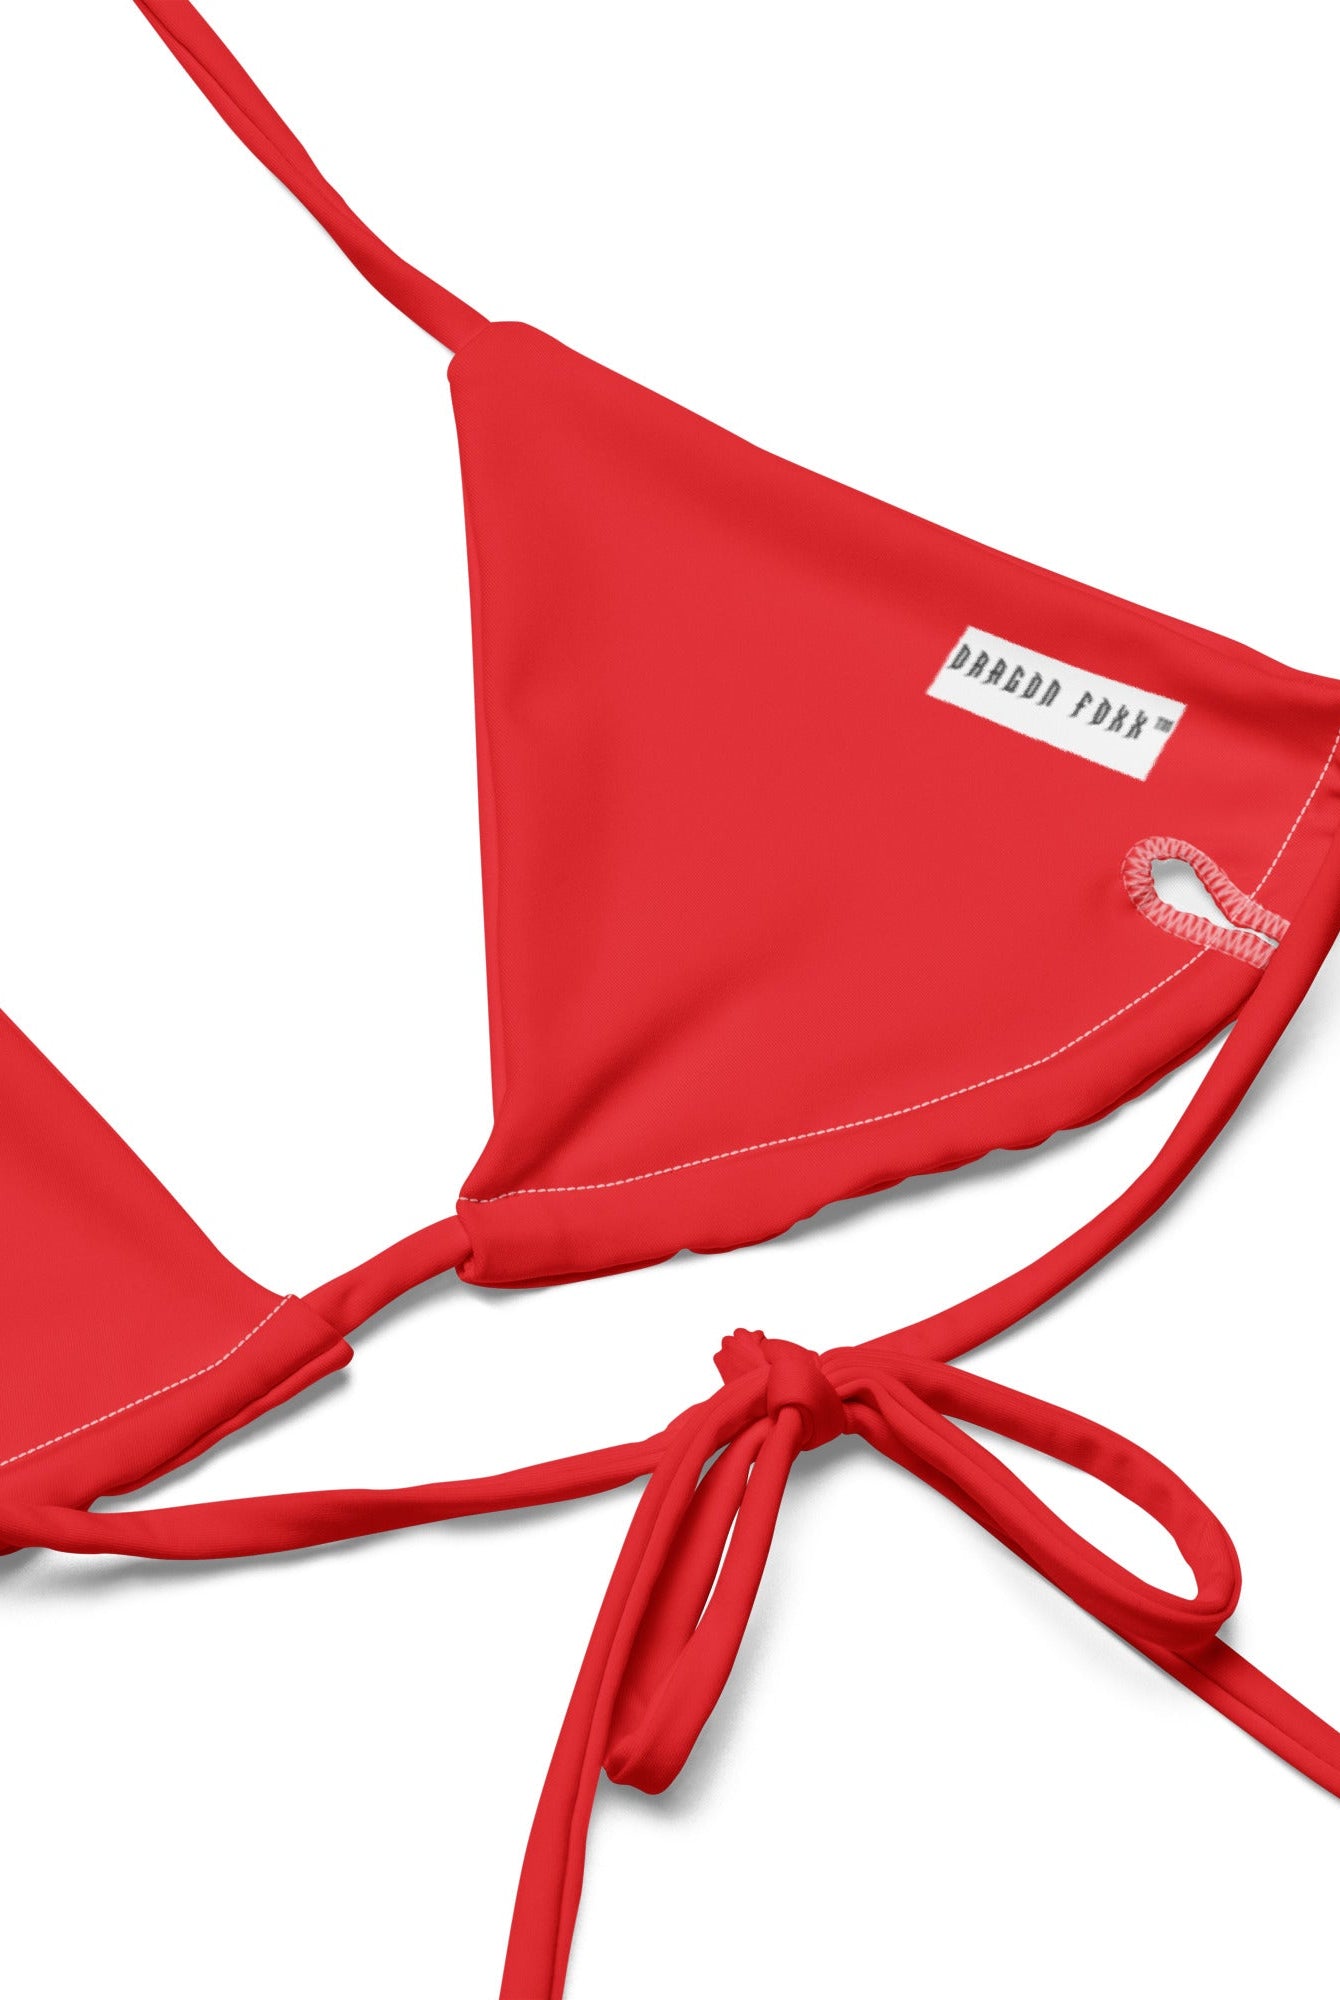 Women's Eco - Red String Bikini Set - Eco - String Bikini Set - DRAGON FOXX™ - Women's Eco - Red String Bikini Set - 9334494_16553 - 2XS - Red - Dragon Foxx™ - Eco String Bikini Sets - Global Shipping